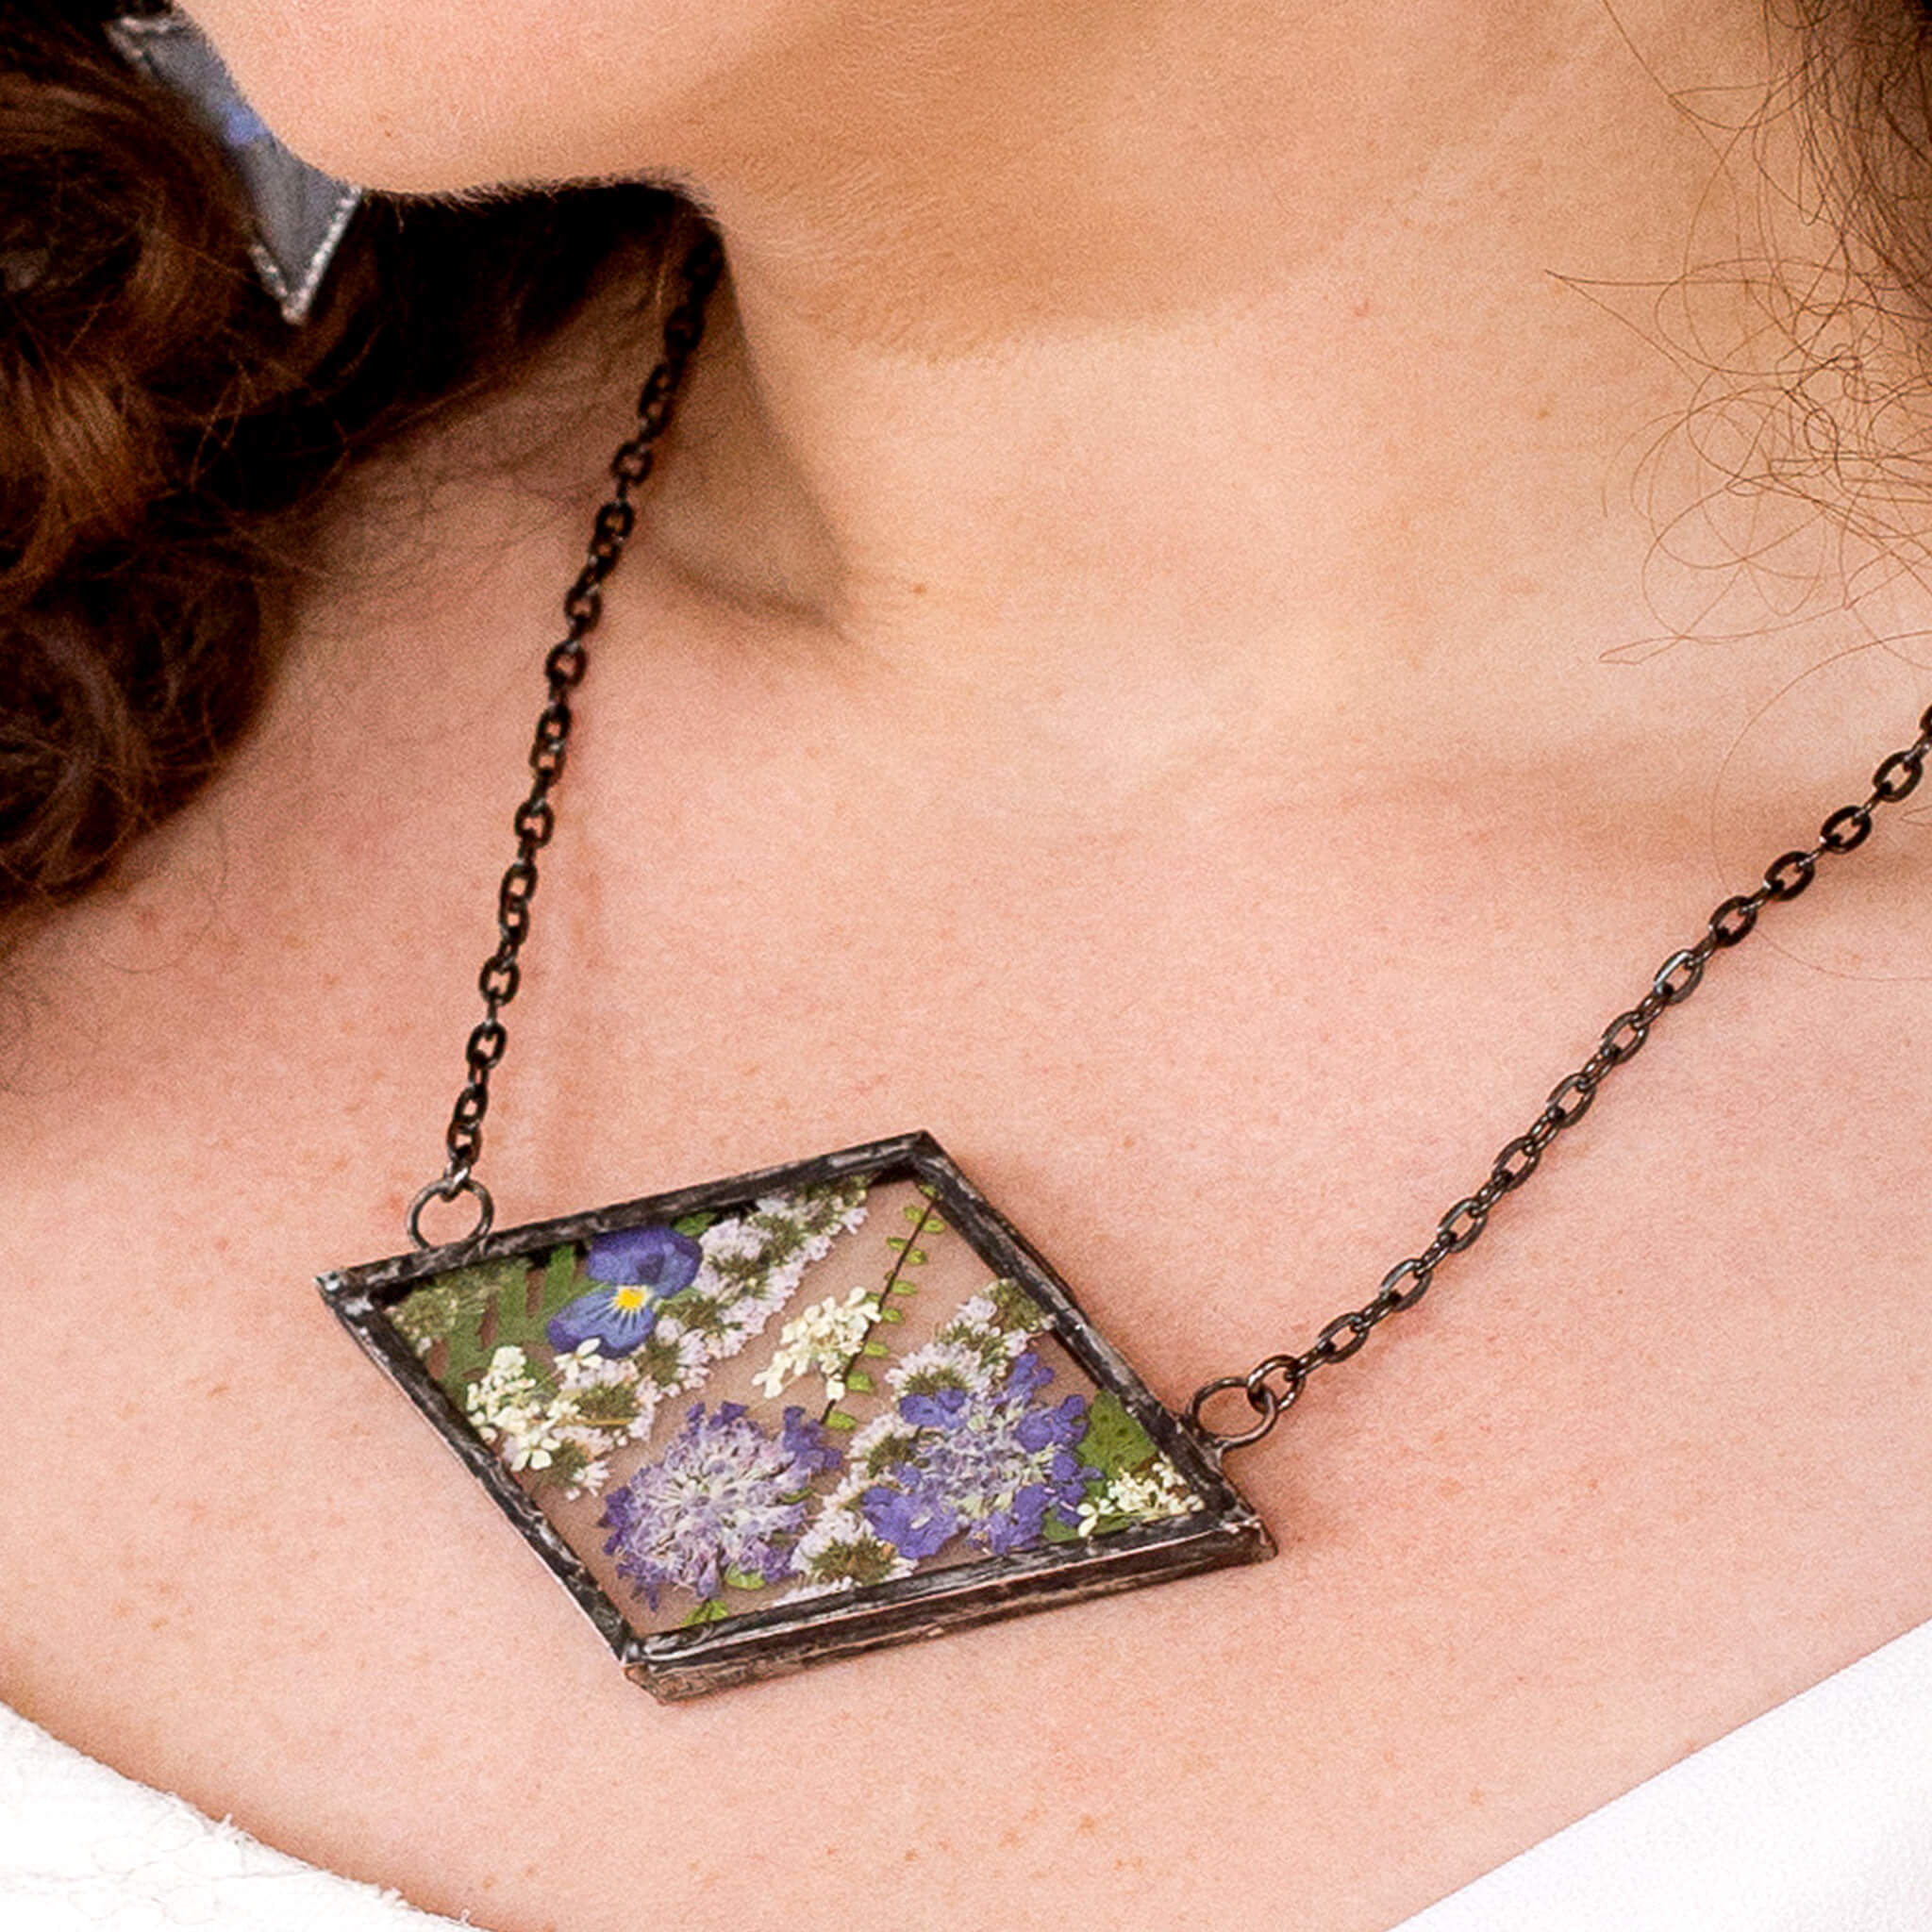 Rhomboidal Purple pressed flower necklace worn on a neck